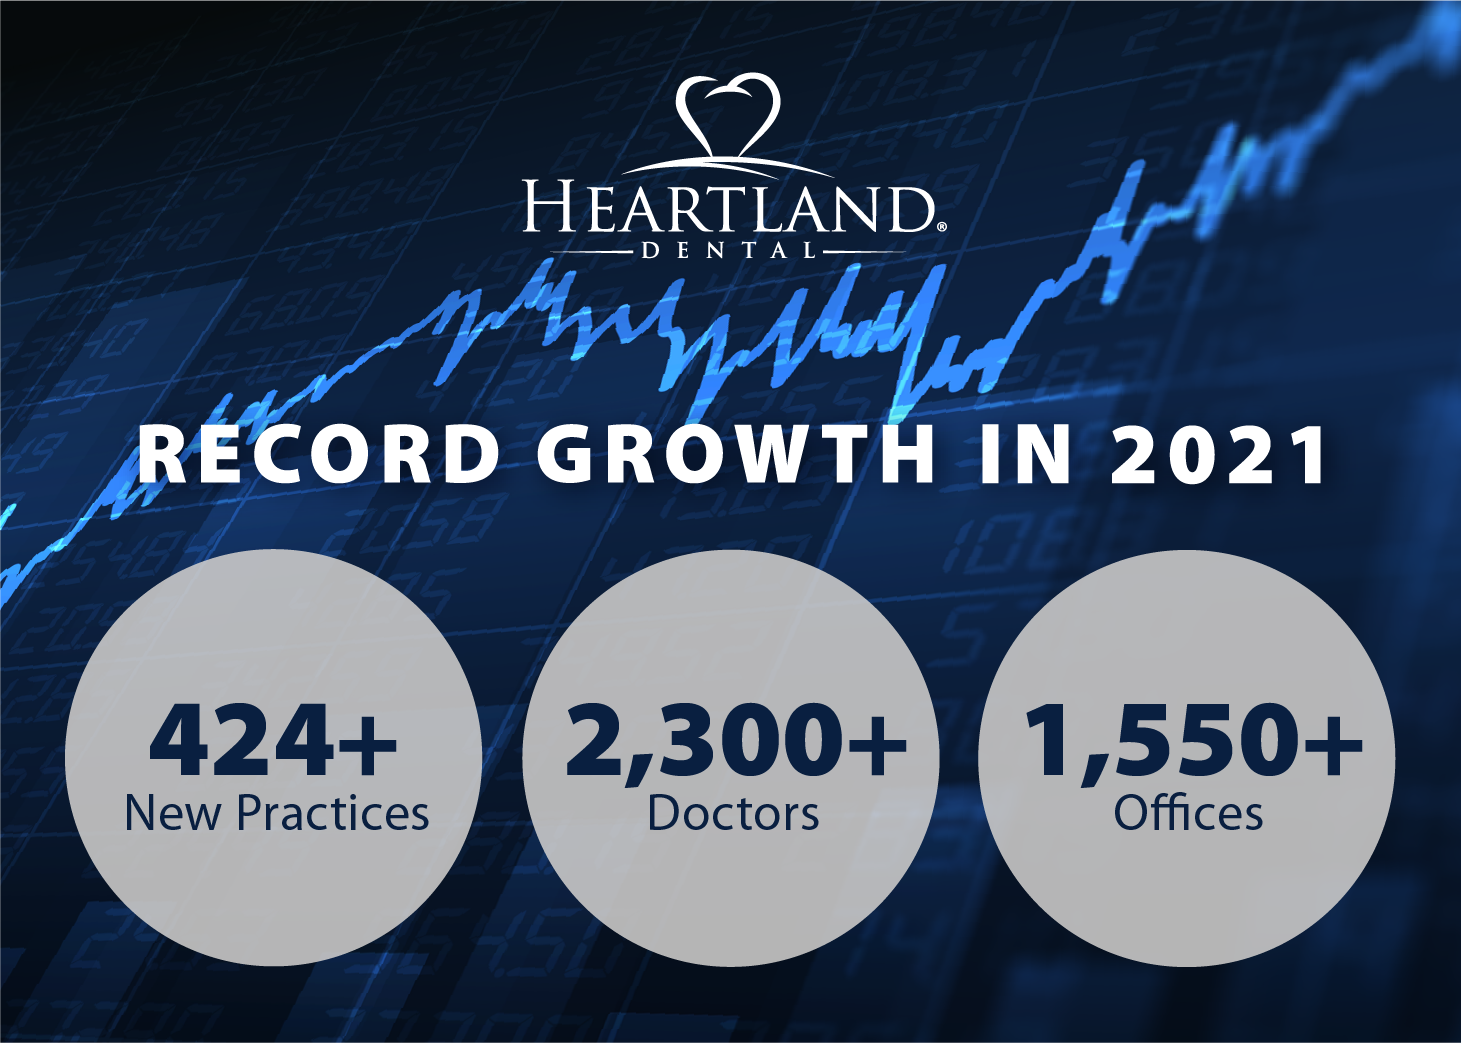 Heartland Dental Celebrates Record Growth in 2021